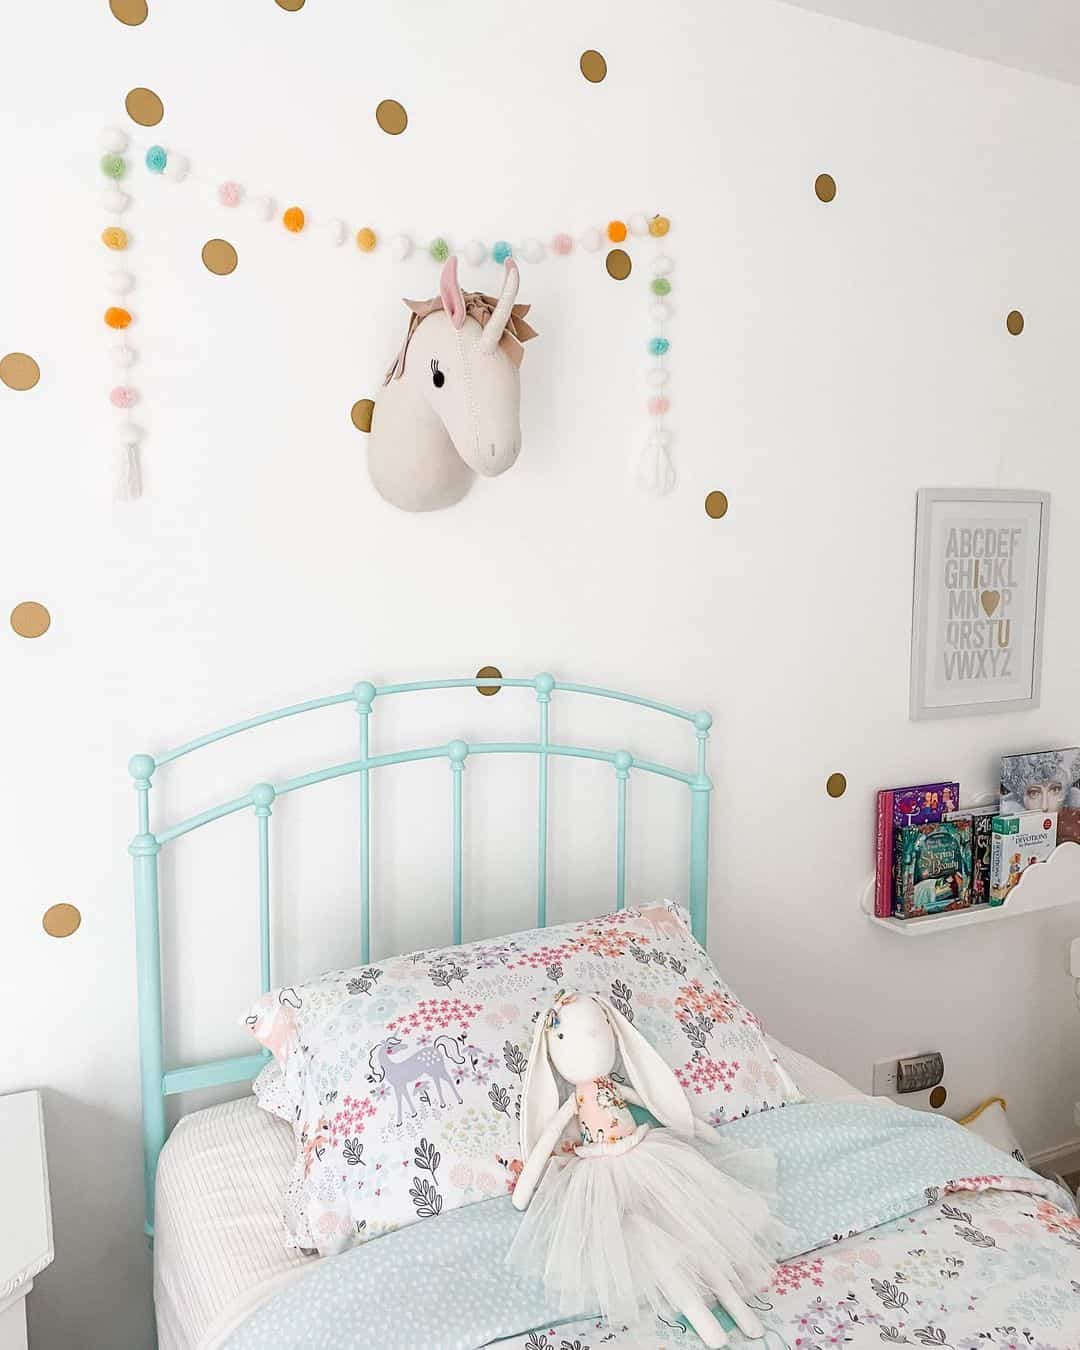 Unicorn Accessories in a Polka-dot Bedroom - Soul & Lane